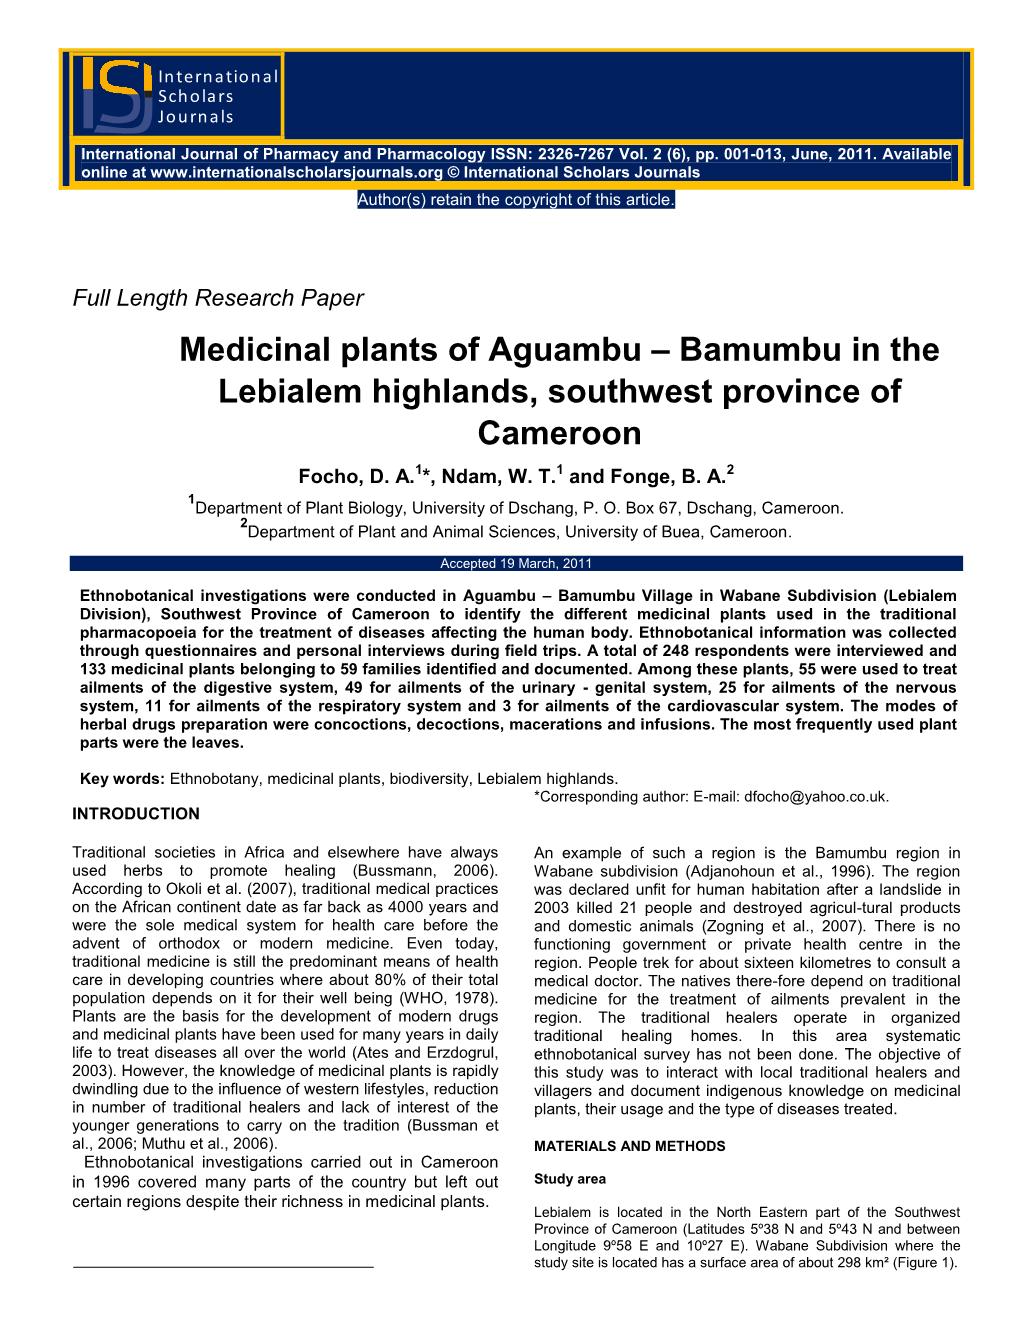 Medicinal Plants of Aguambu – Bamumbu in the Lebialem Highlands, Southwest Province Of